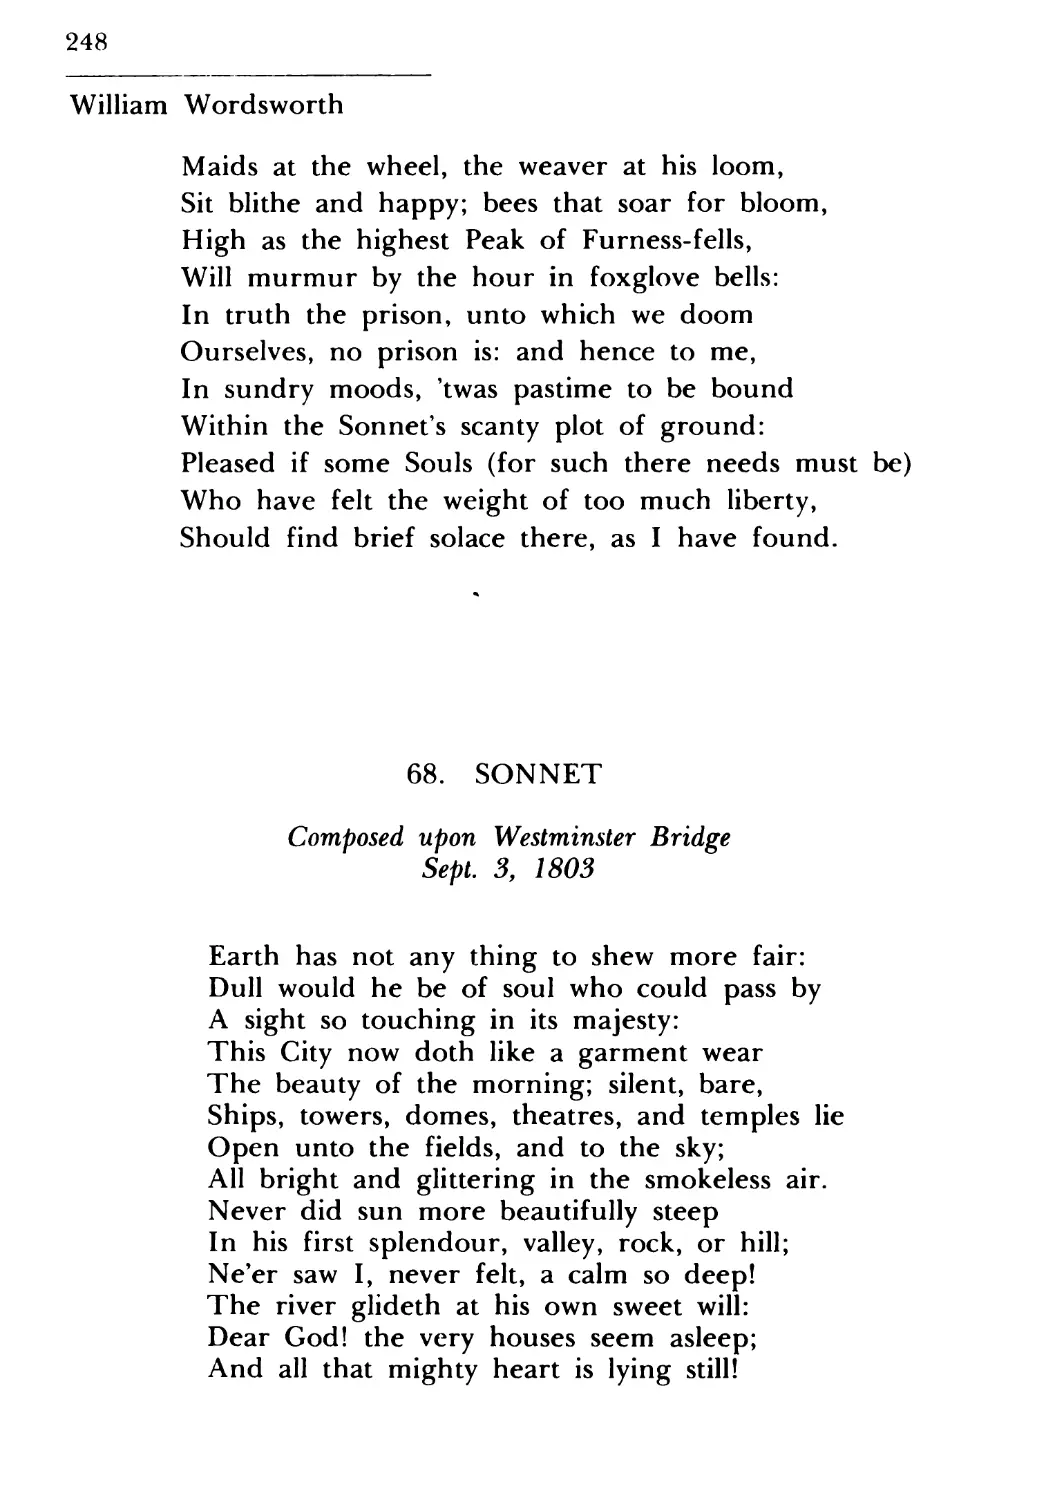 68. Sonnet Composed upon Westminster Bridge. Sept. 3, 1803